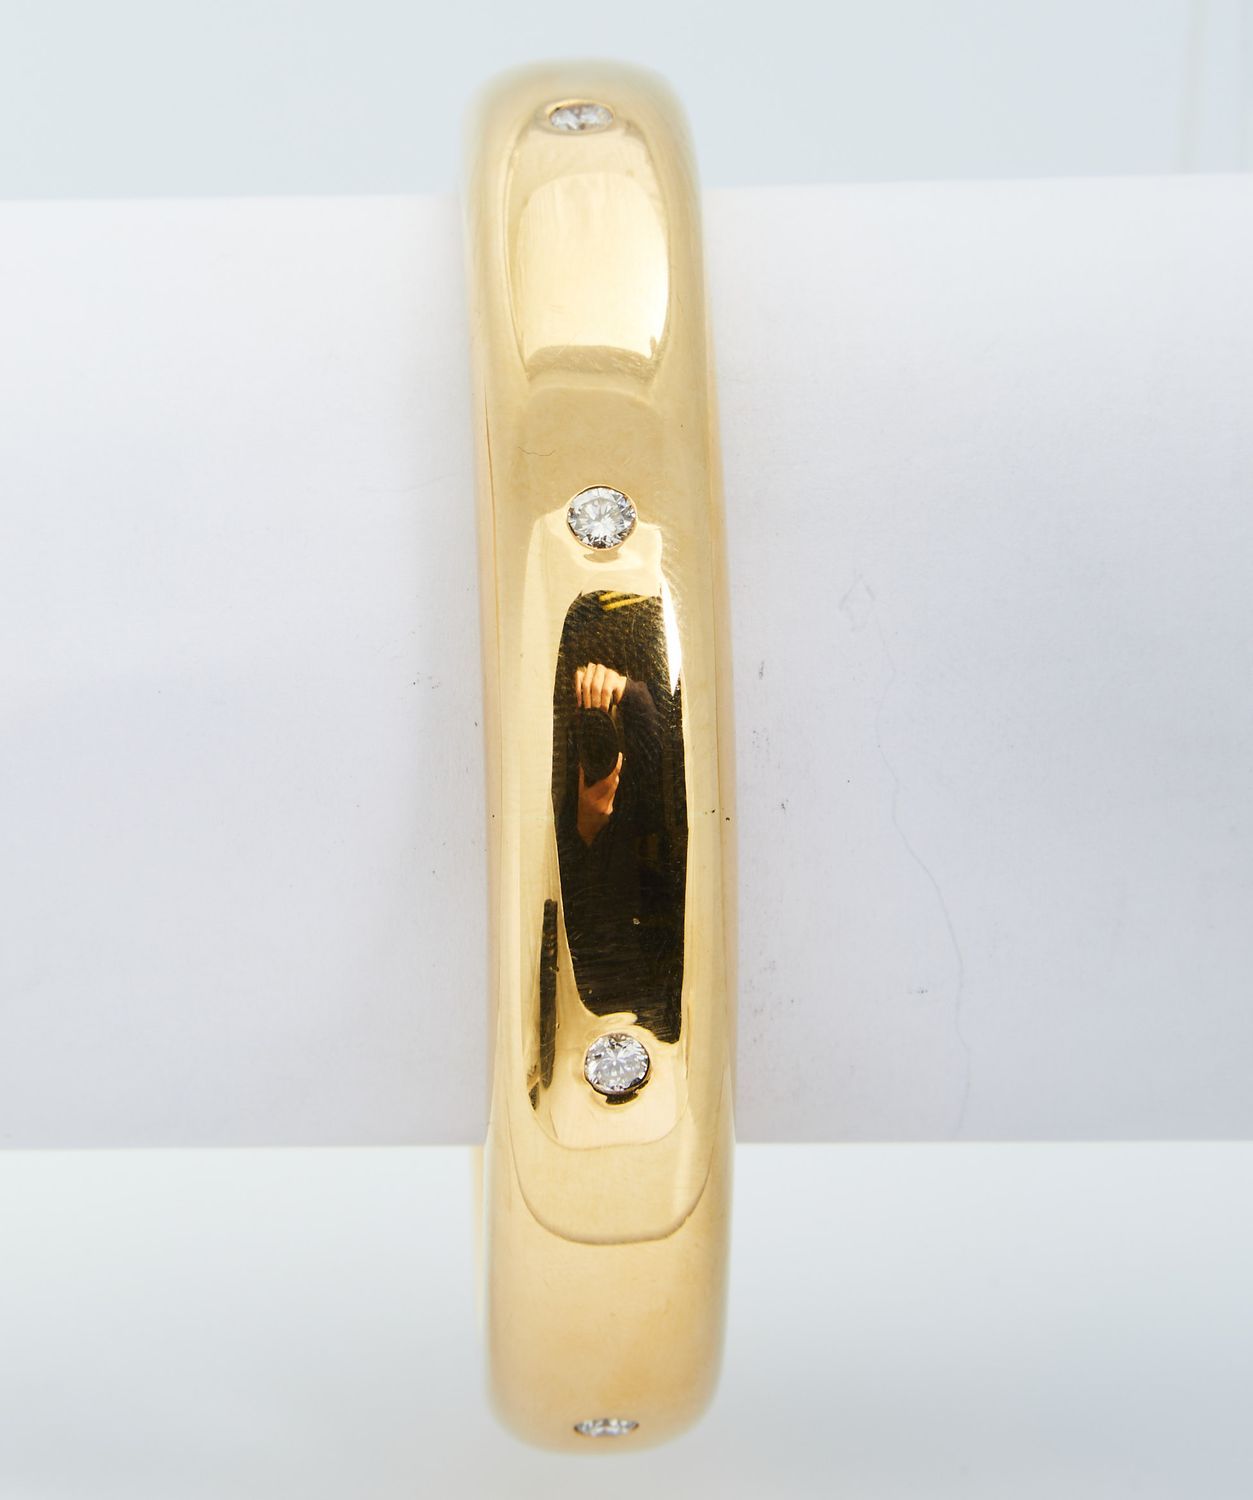 Null 201 黄金手镯，镶嵌8颗钻石，每颗约0.10克拉，手腕19厘米，重量326克